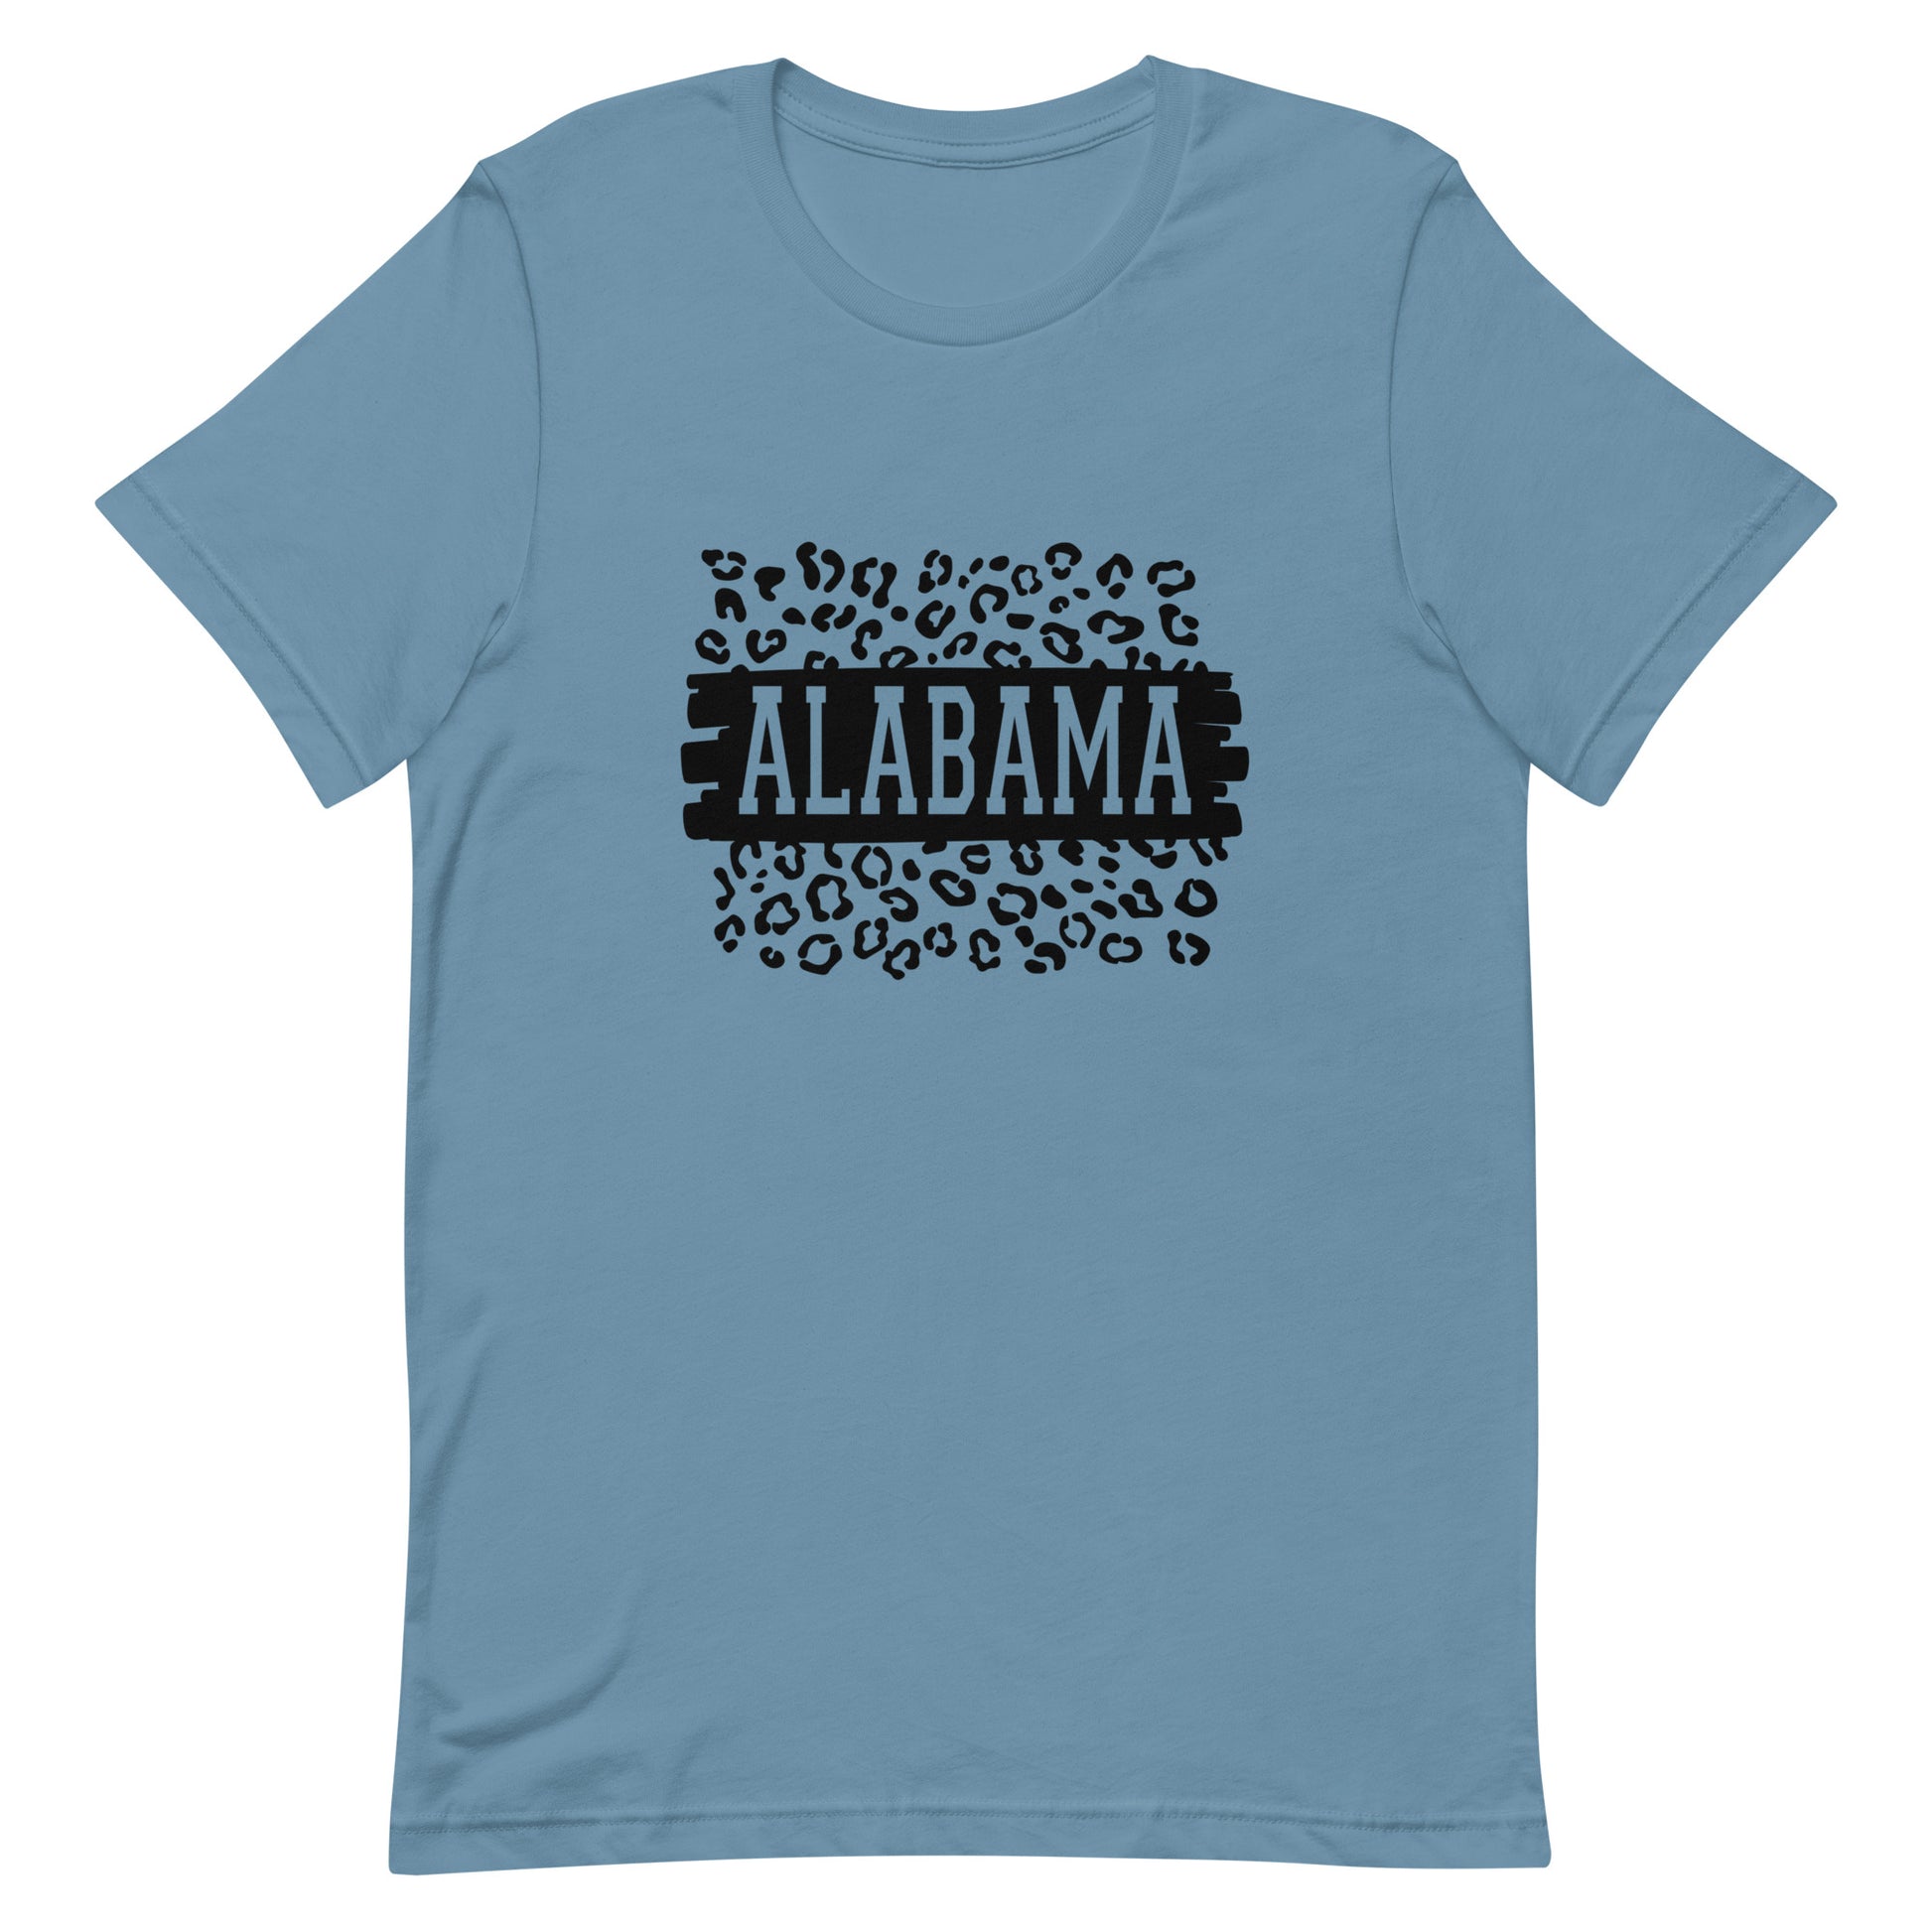 Alabama Black on Leopard Unisex T-shirt